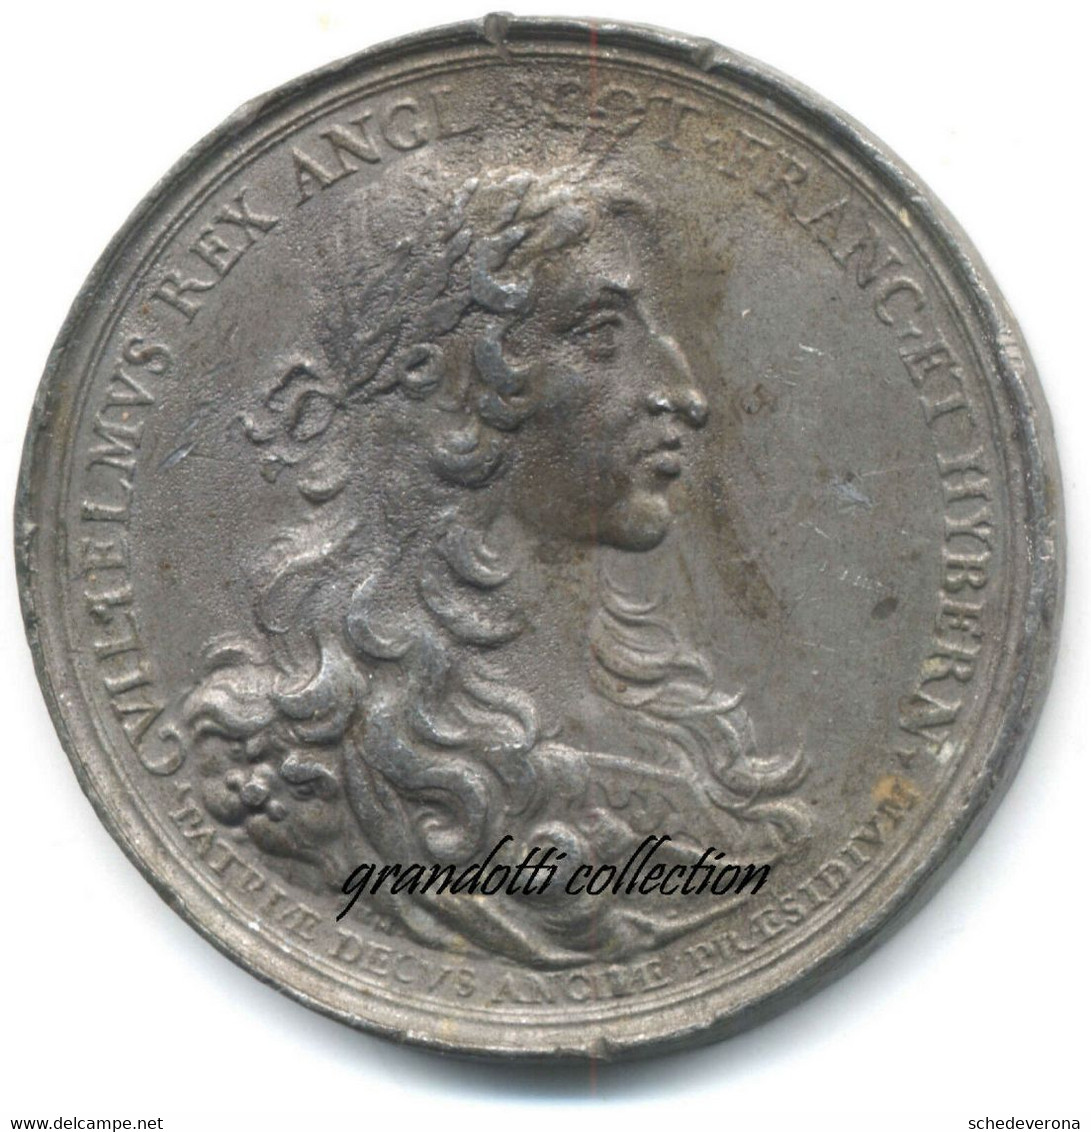 GUGLIEMO III INGHILTERRA 1689 BRITANNIA RESTITUITA MEDAGLIA MÜLLER - Royaux/De Noblesse